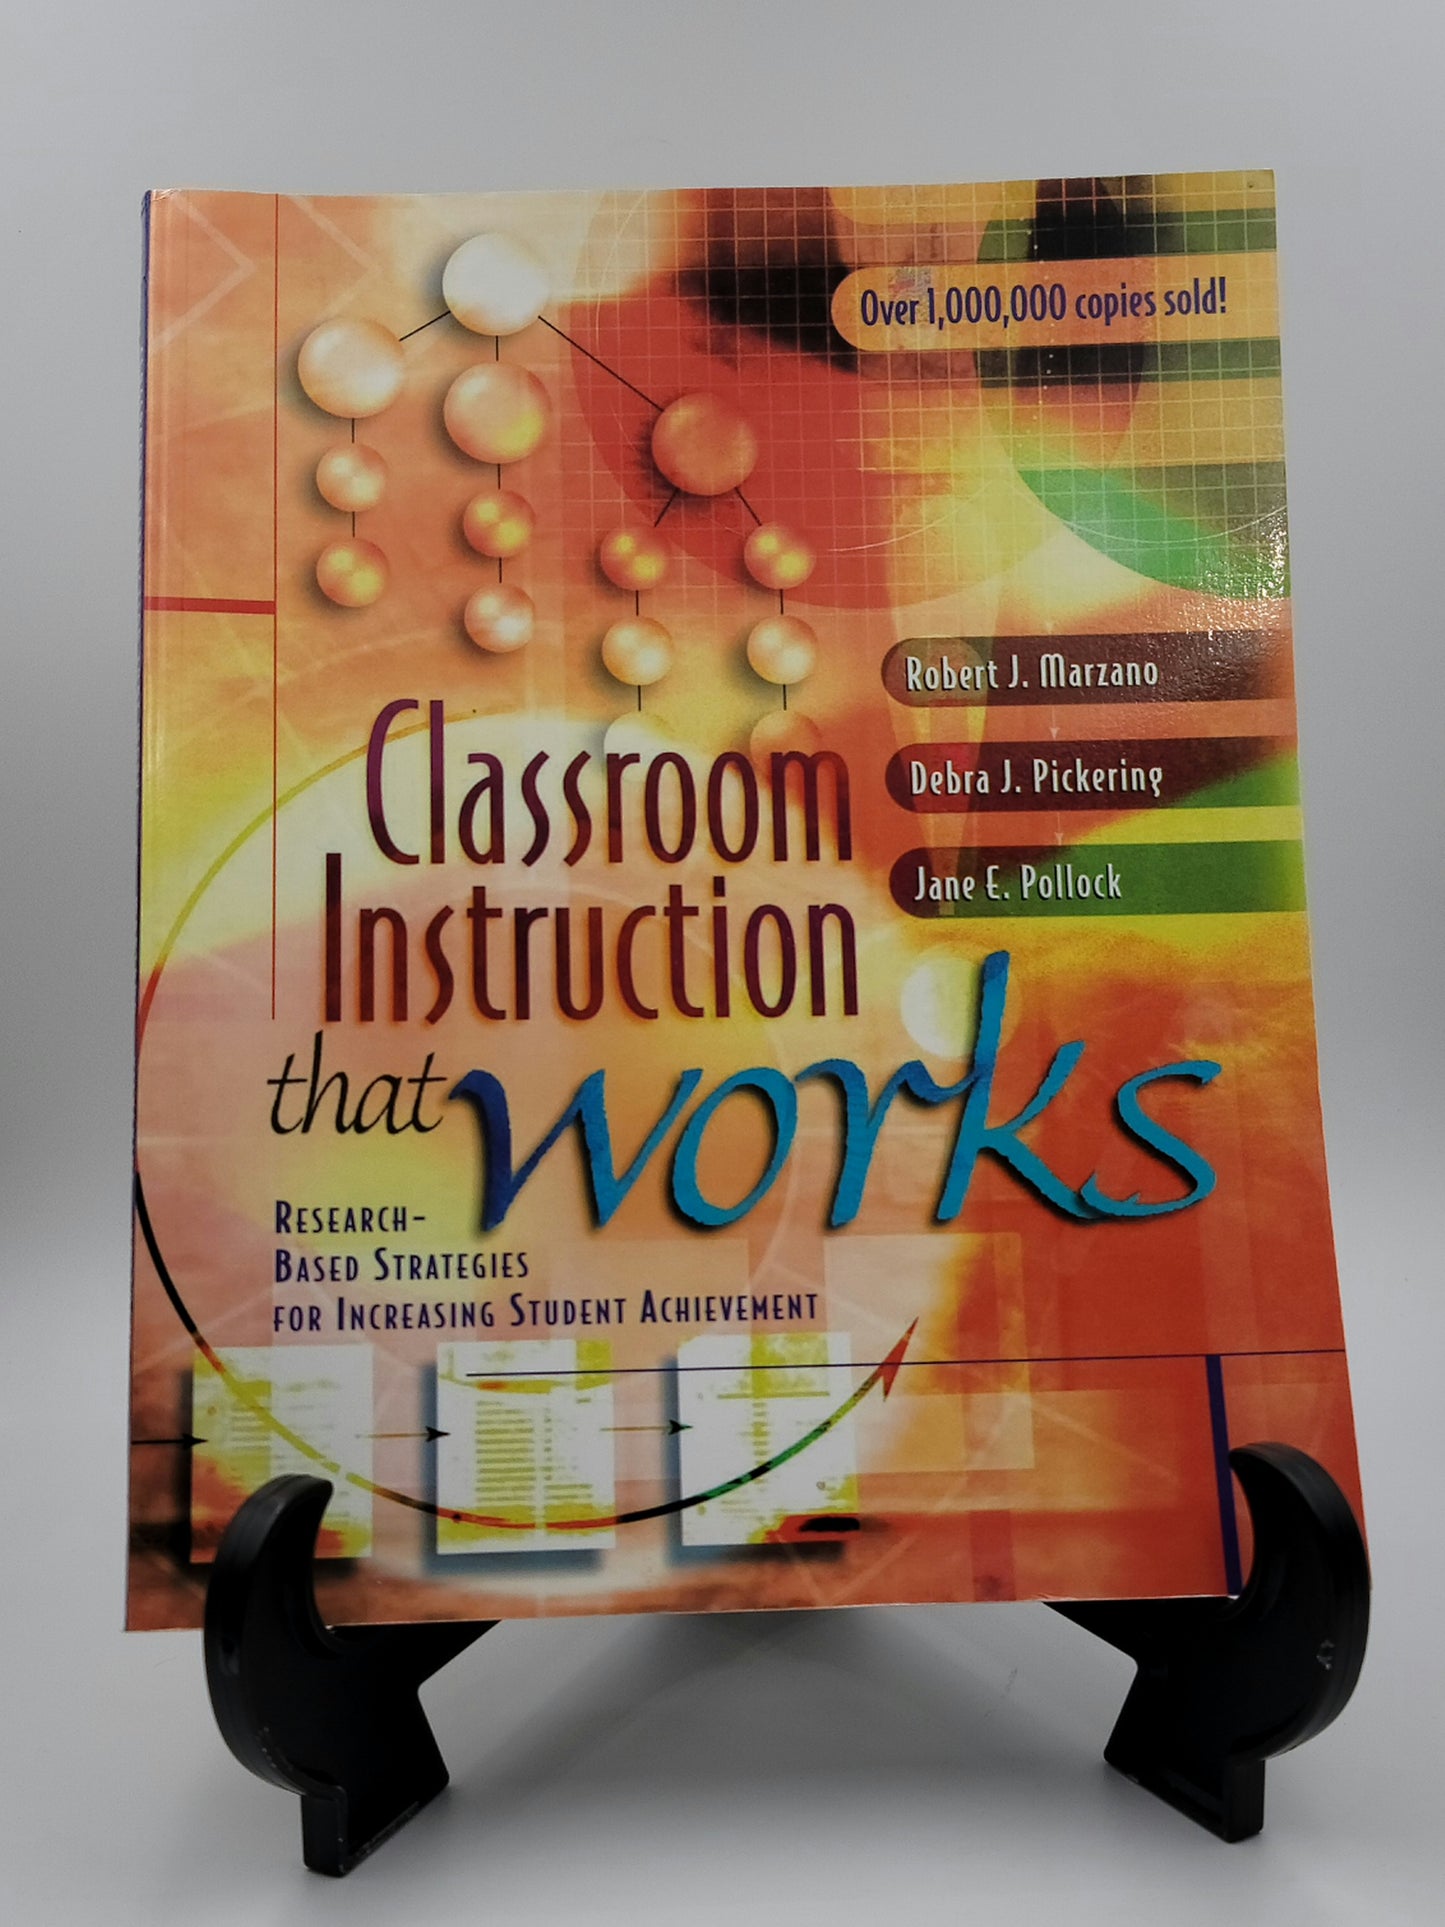 Classroom Instruction that Works by Robert J. Marzano et. al.